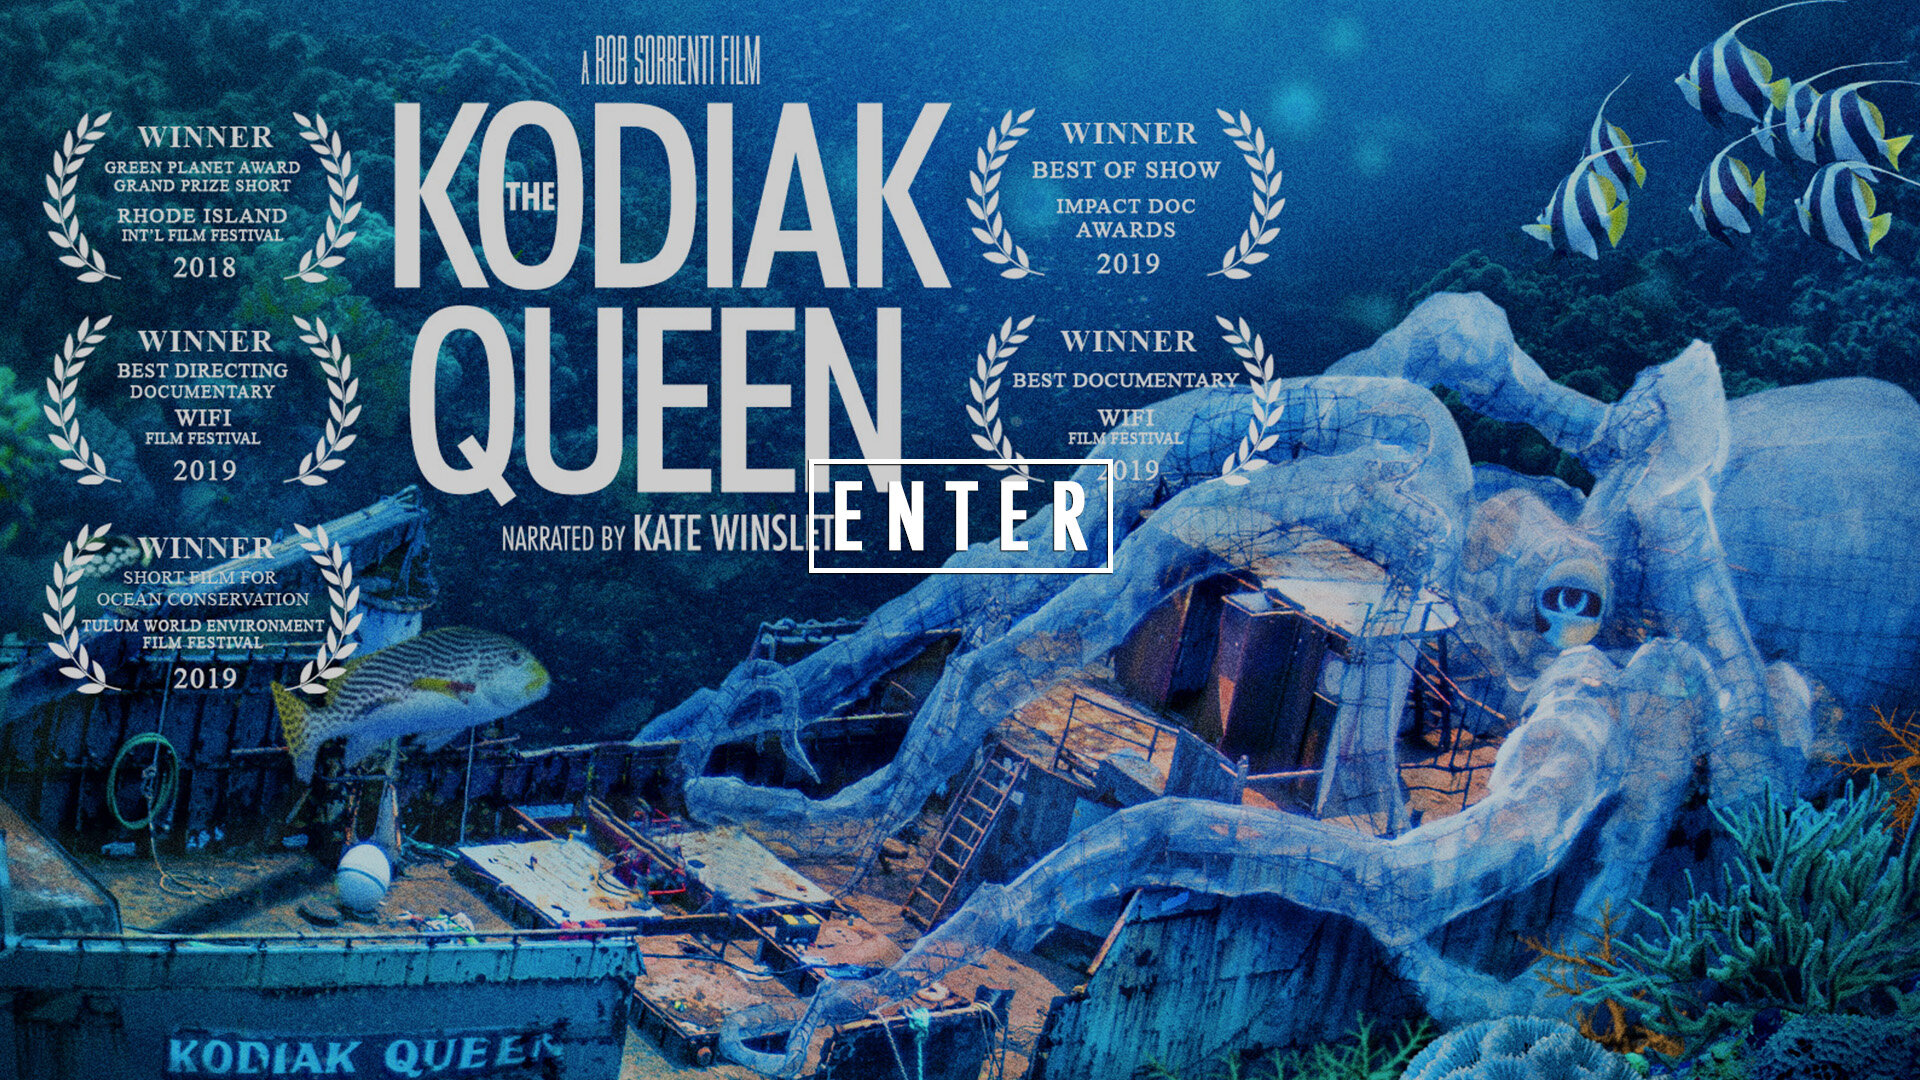 The Kodiak Queen